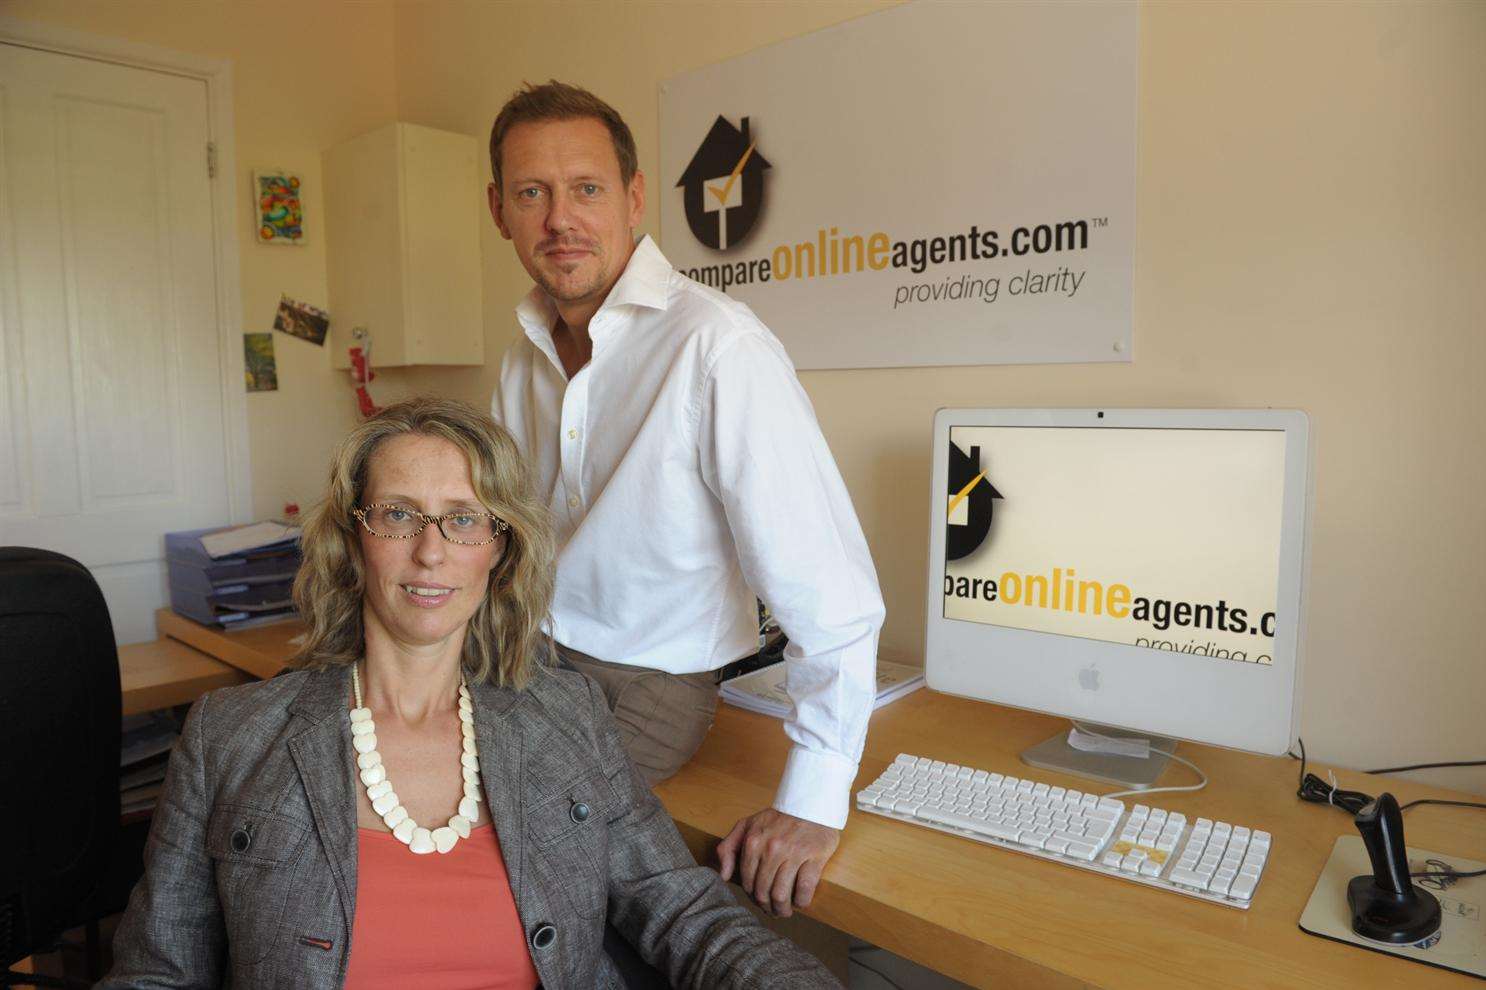 Robert Ashley and Francesca Marchesini-Ashley have launched an online estate agent comparison website